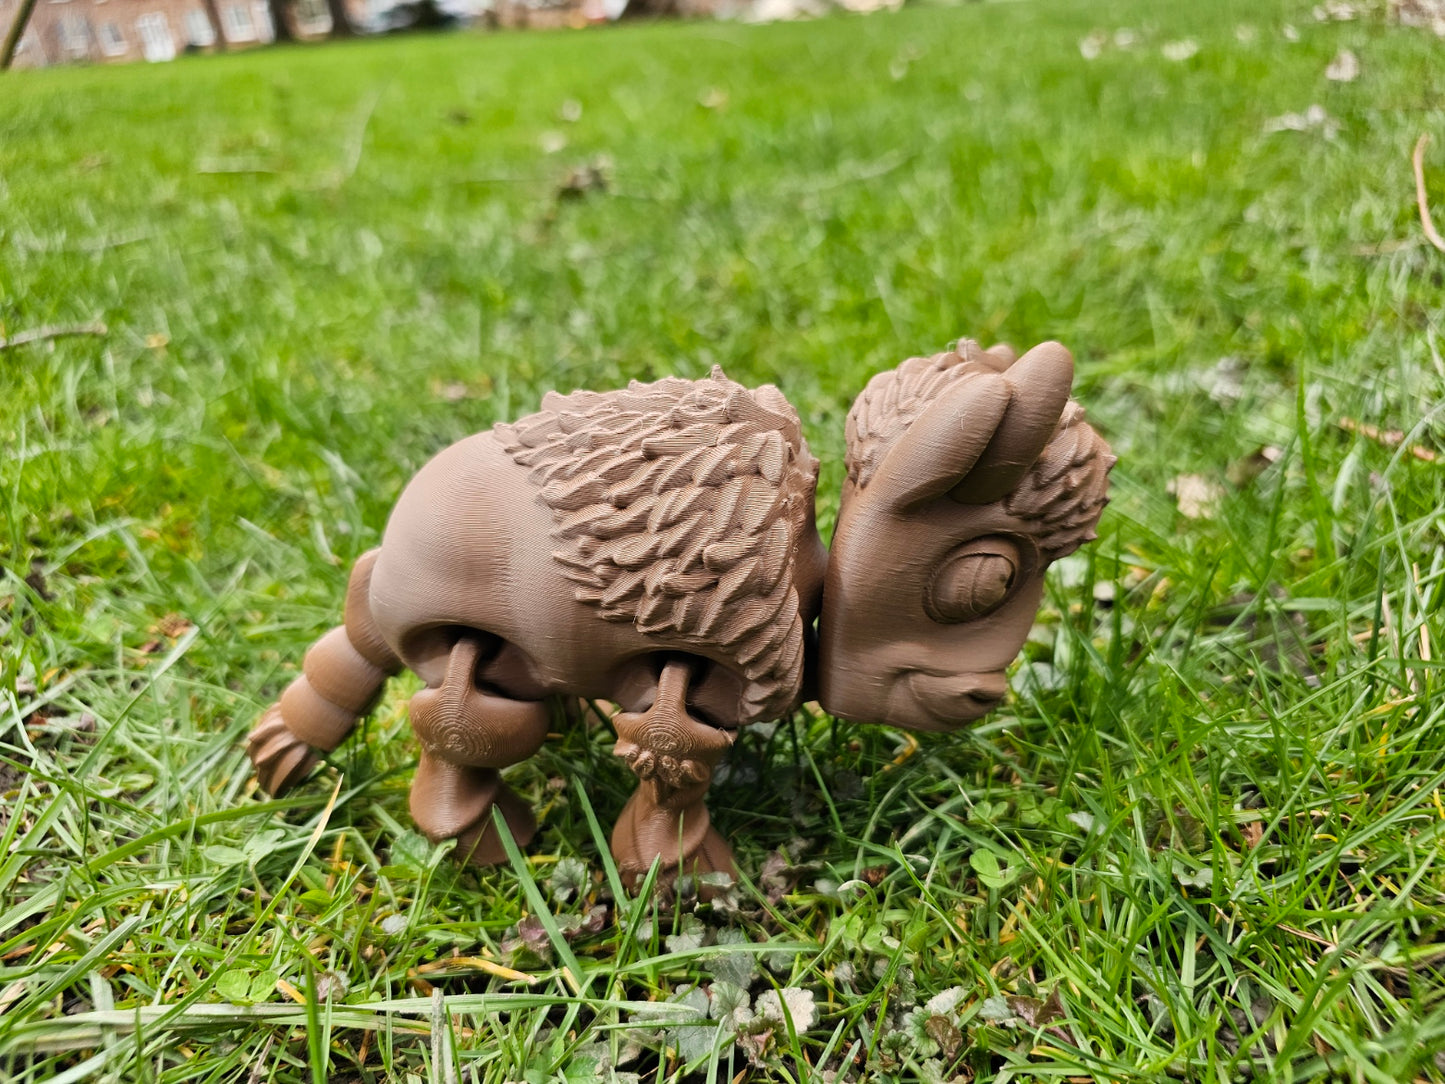 3D Printed Flexi Bison